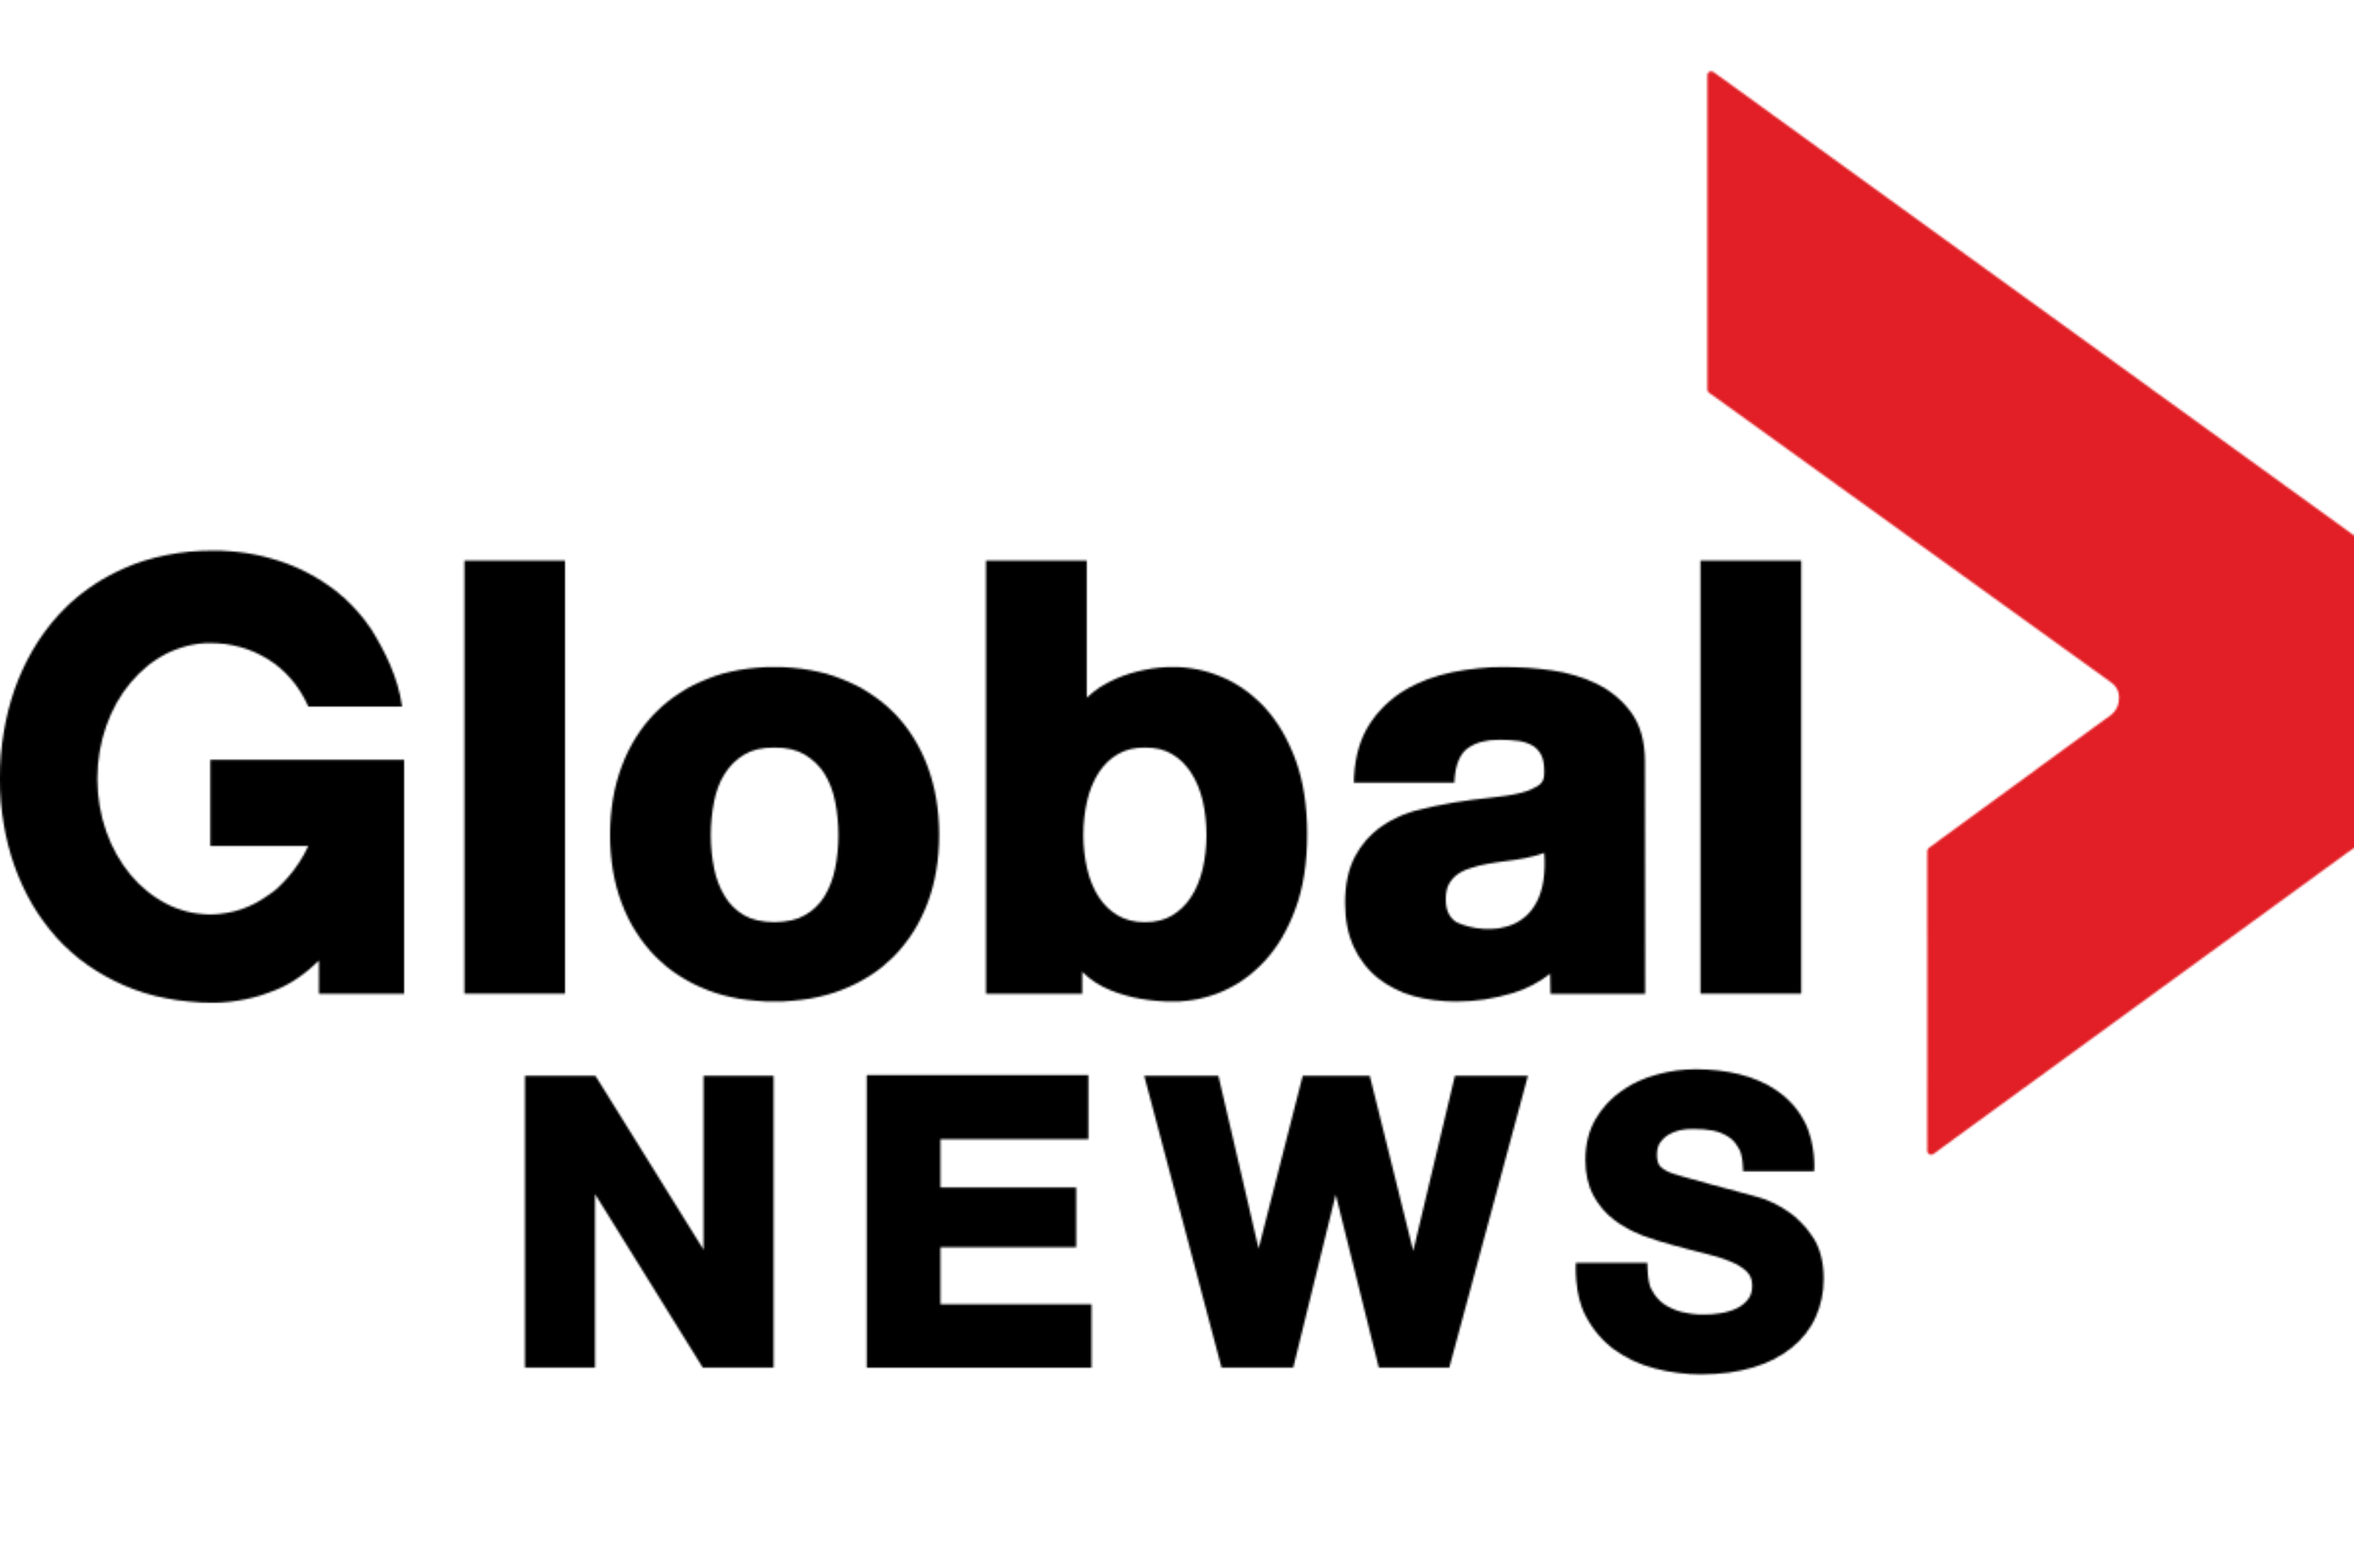 global news logo